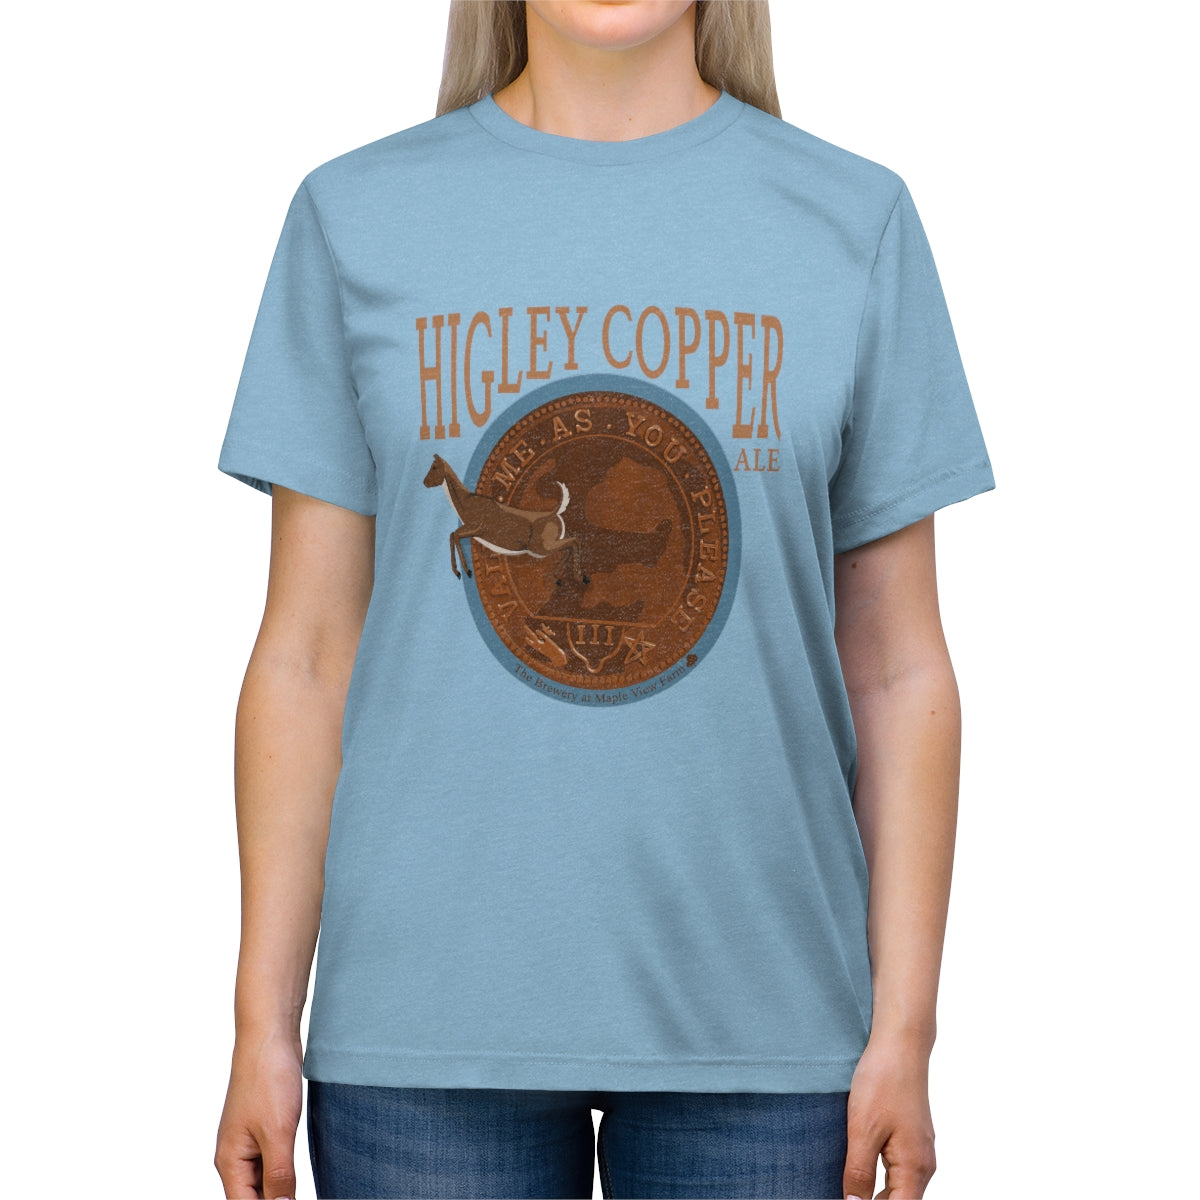 Higley Copper Ale